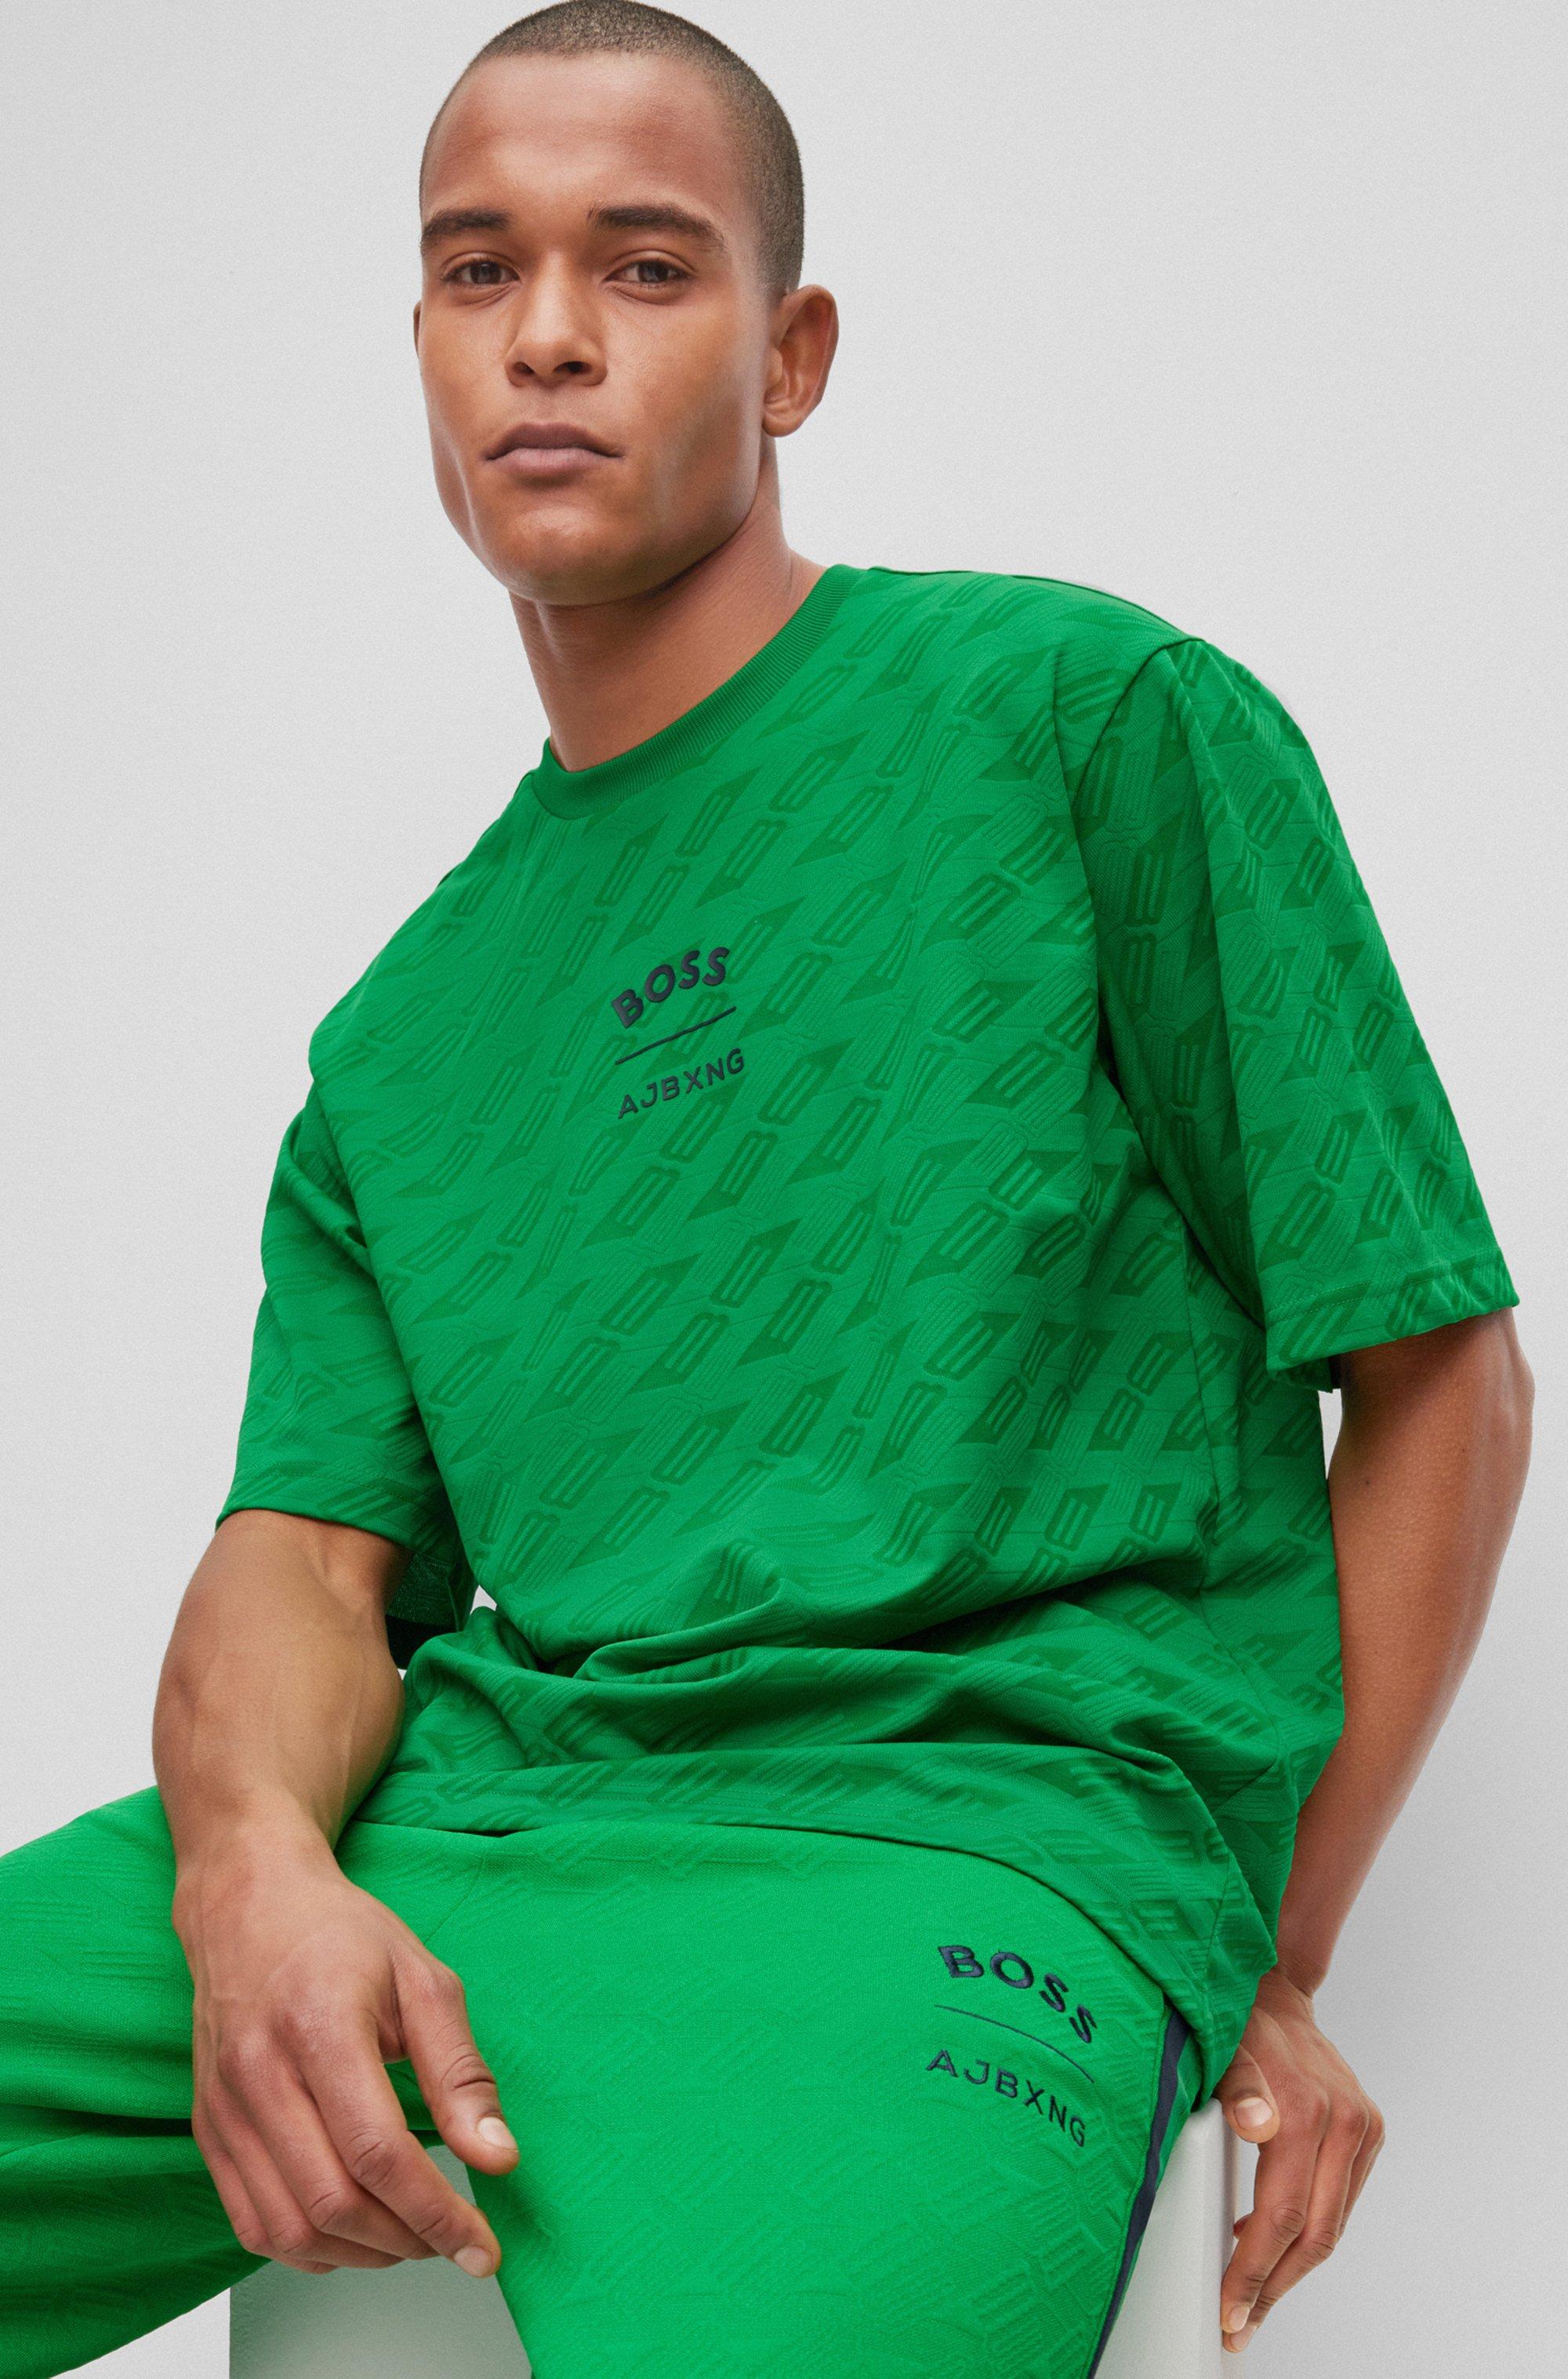 BOSS by HUGO BOSS X Ajbxng Fit Logo Print T-shirt in Green for Men | Lyst